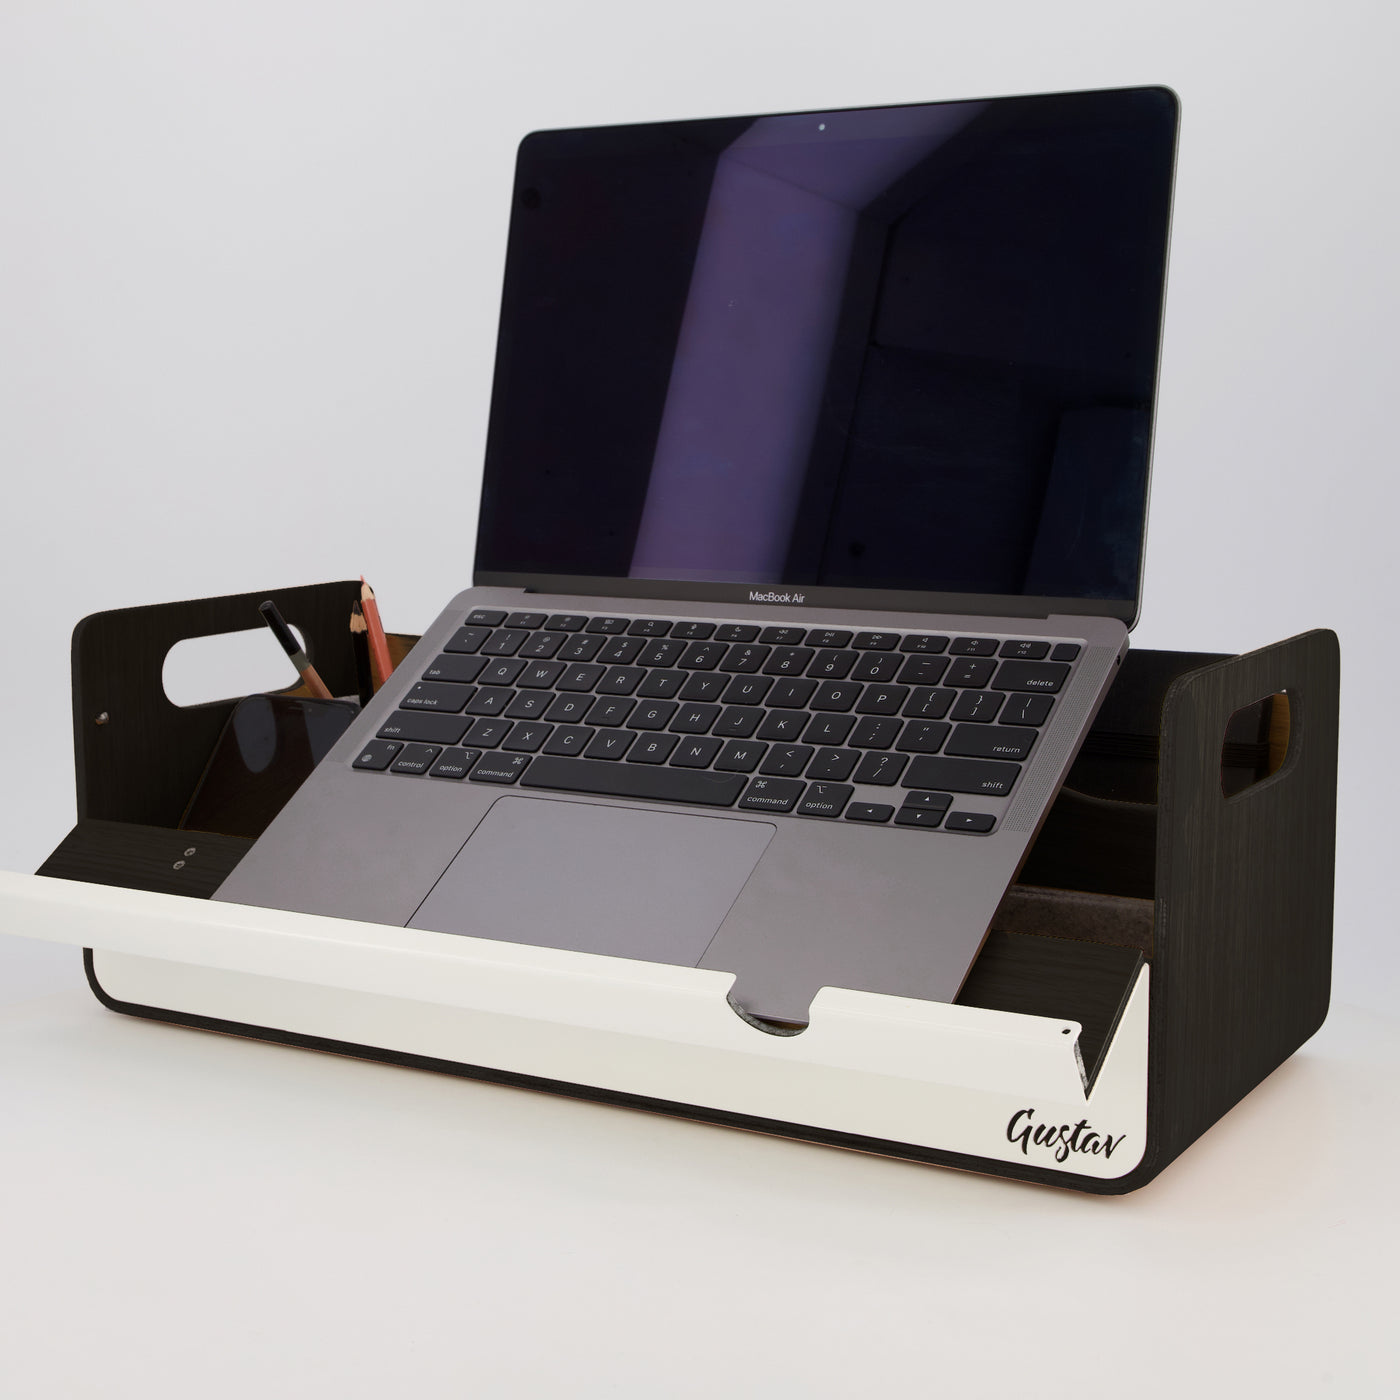 Gustav Original XL Black - Portable Desk Organizer and Laptop Stand